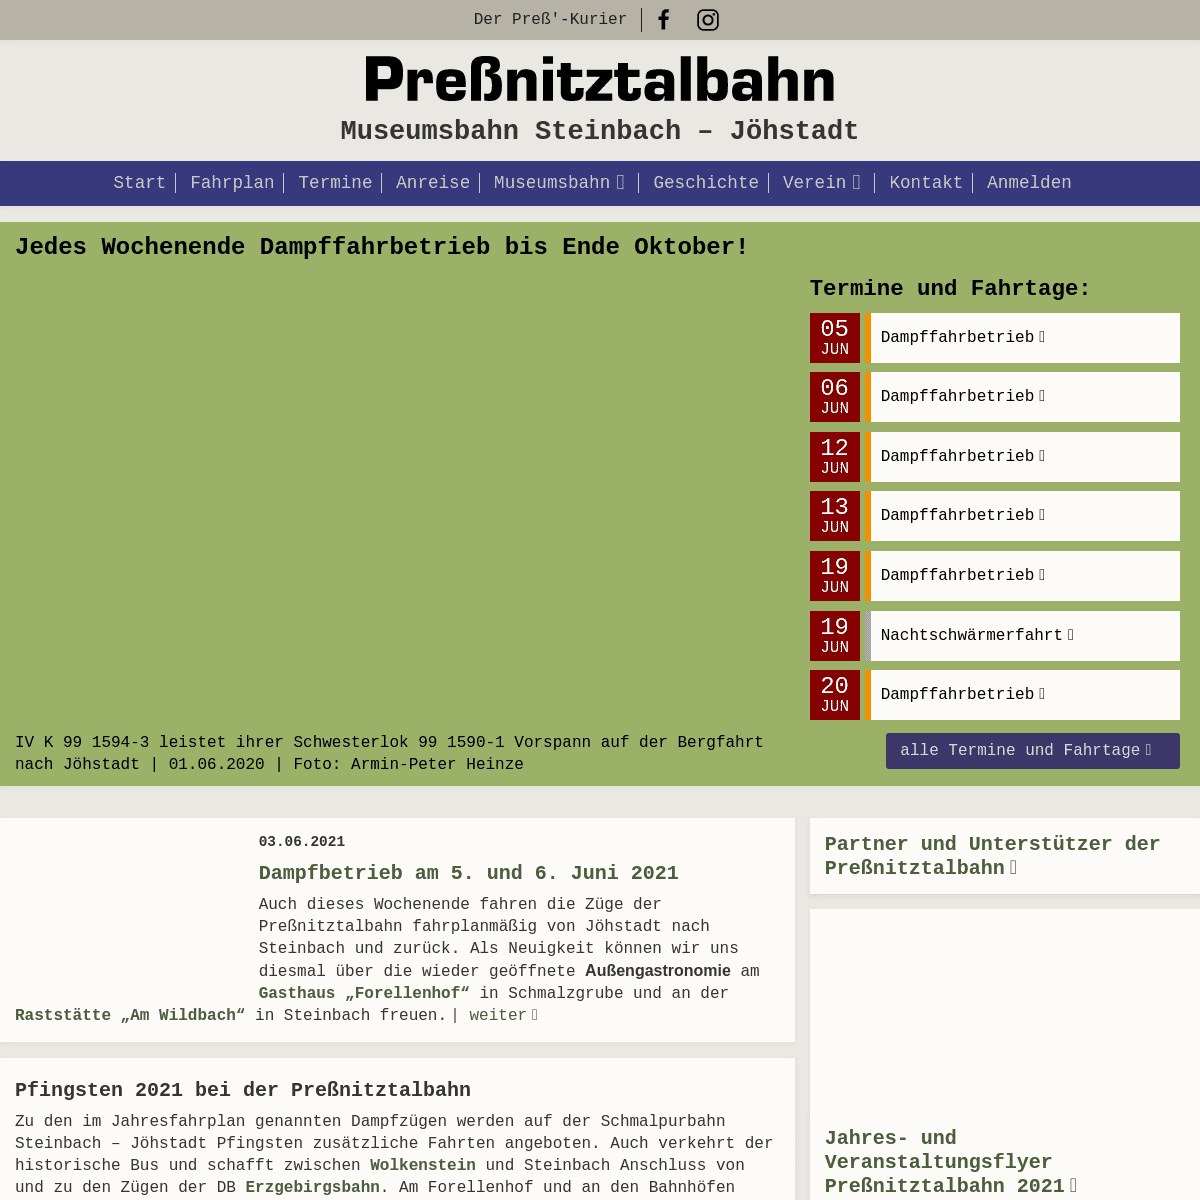 A complete backup of https://pressnitztalbahn.de